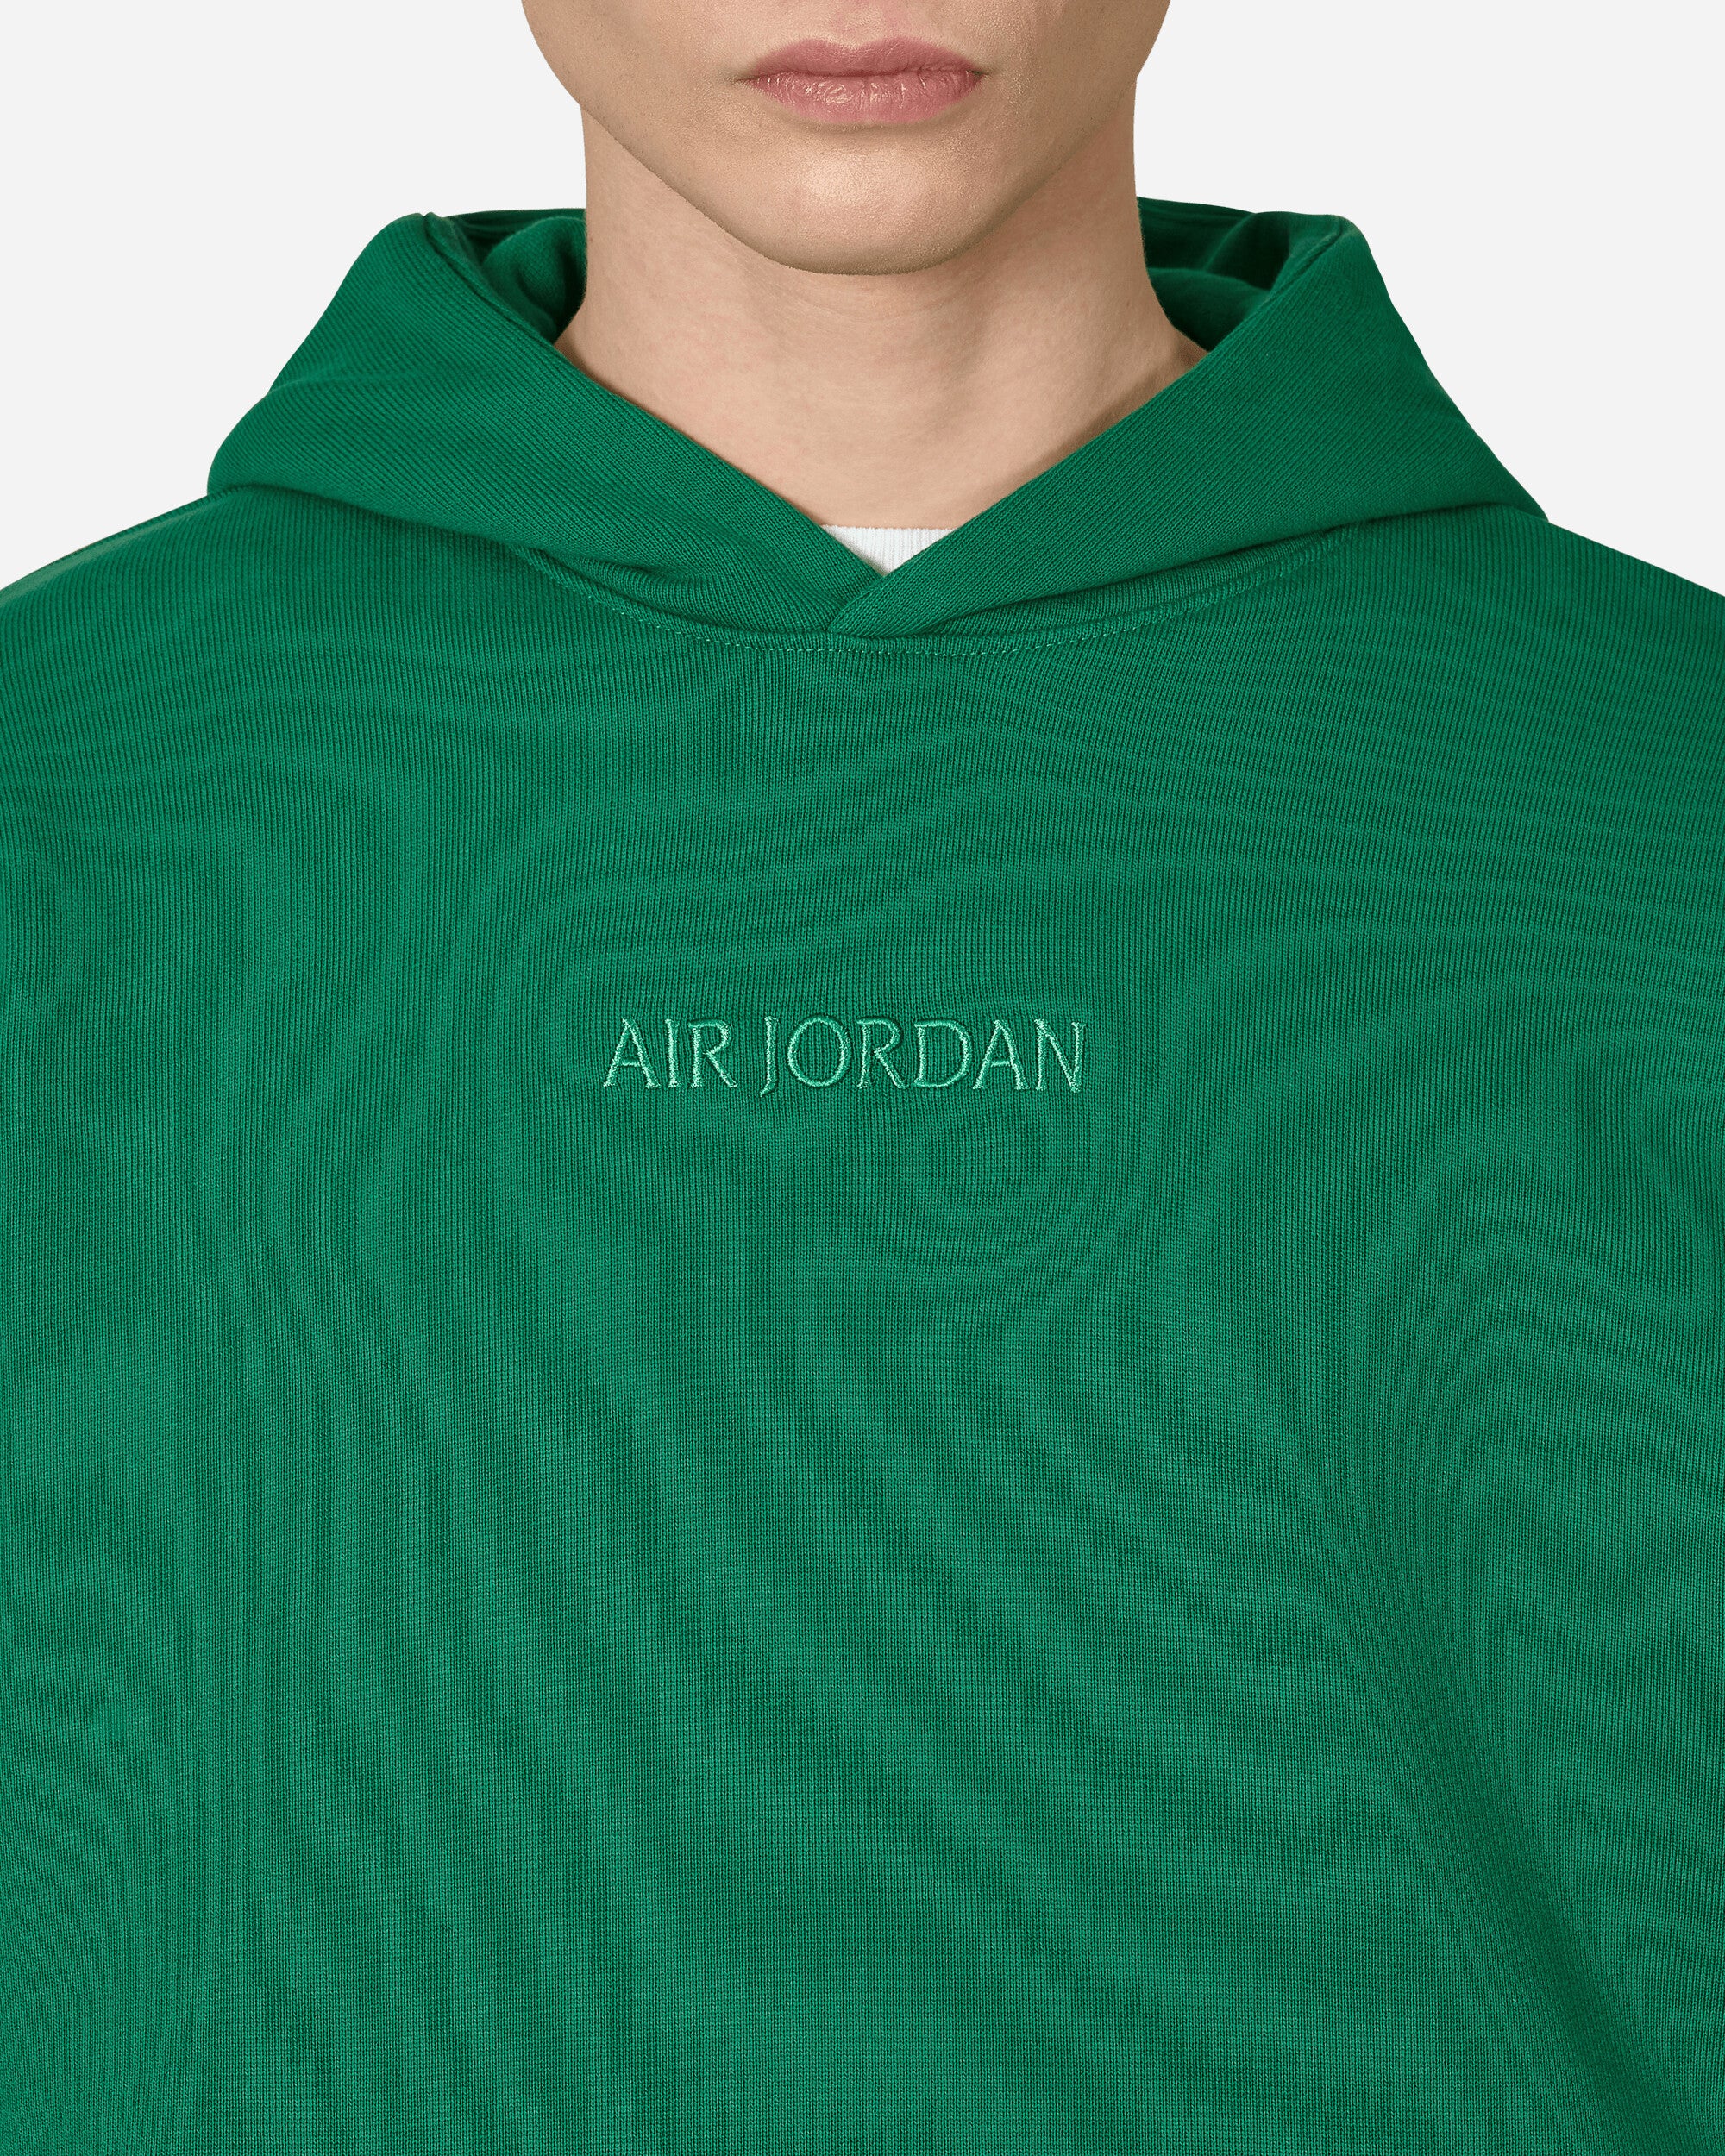 Nike Jordan Air Jordan Wm Flc Hoodie Pine Green Sweatshirts Hoodies FJ1966-302